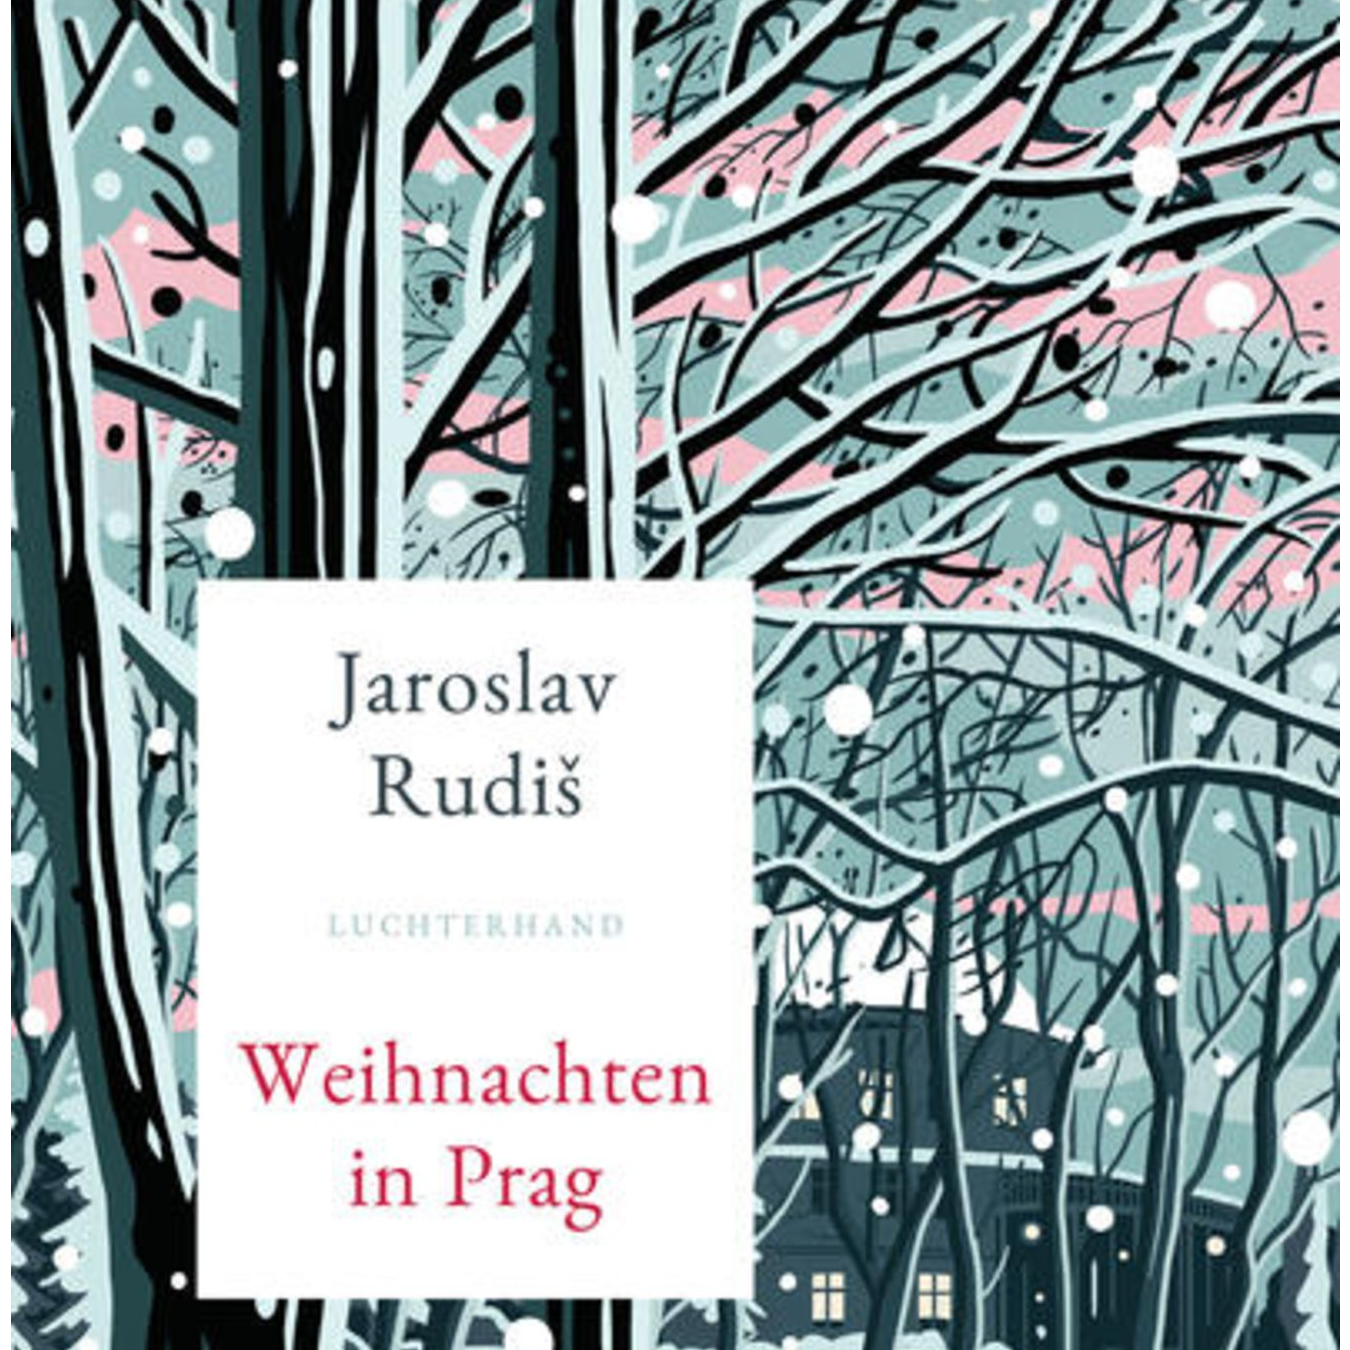 Jaroslav Rudiš: "Weihnachten in Prag"